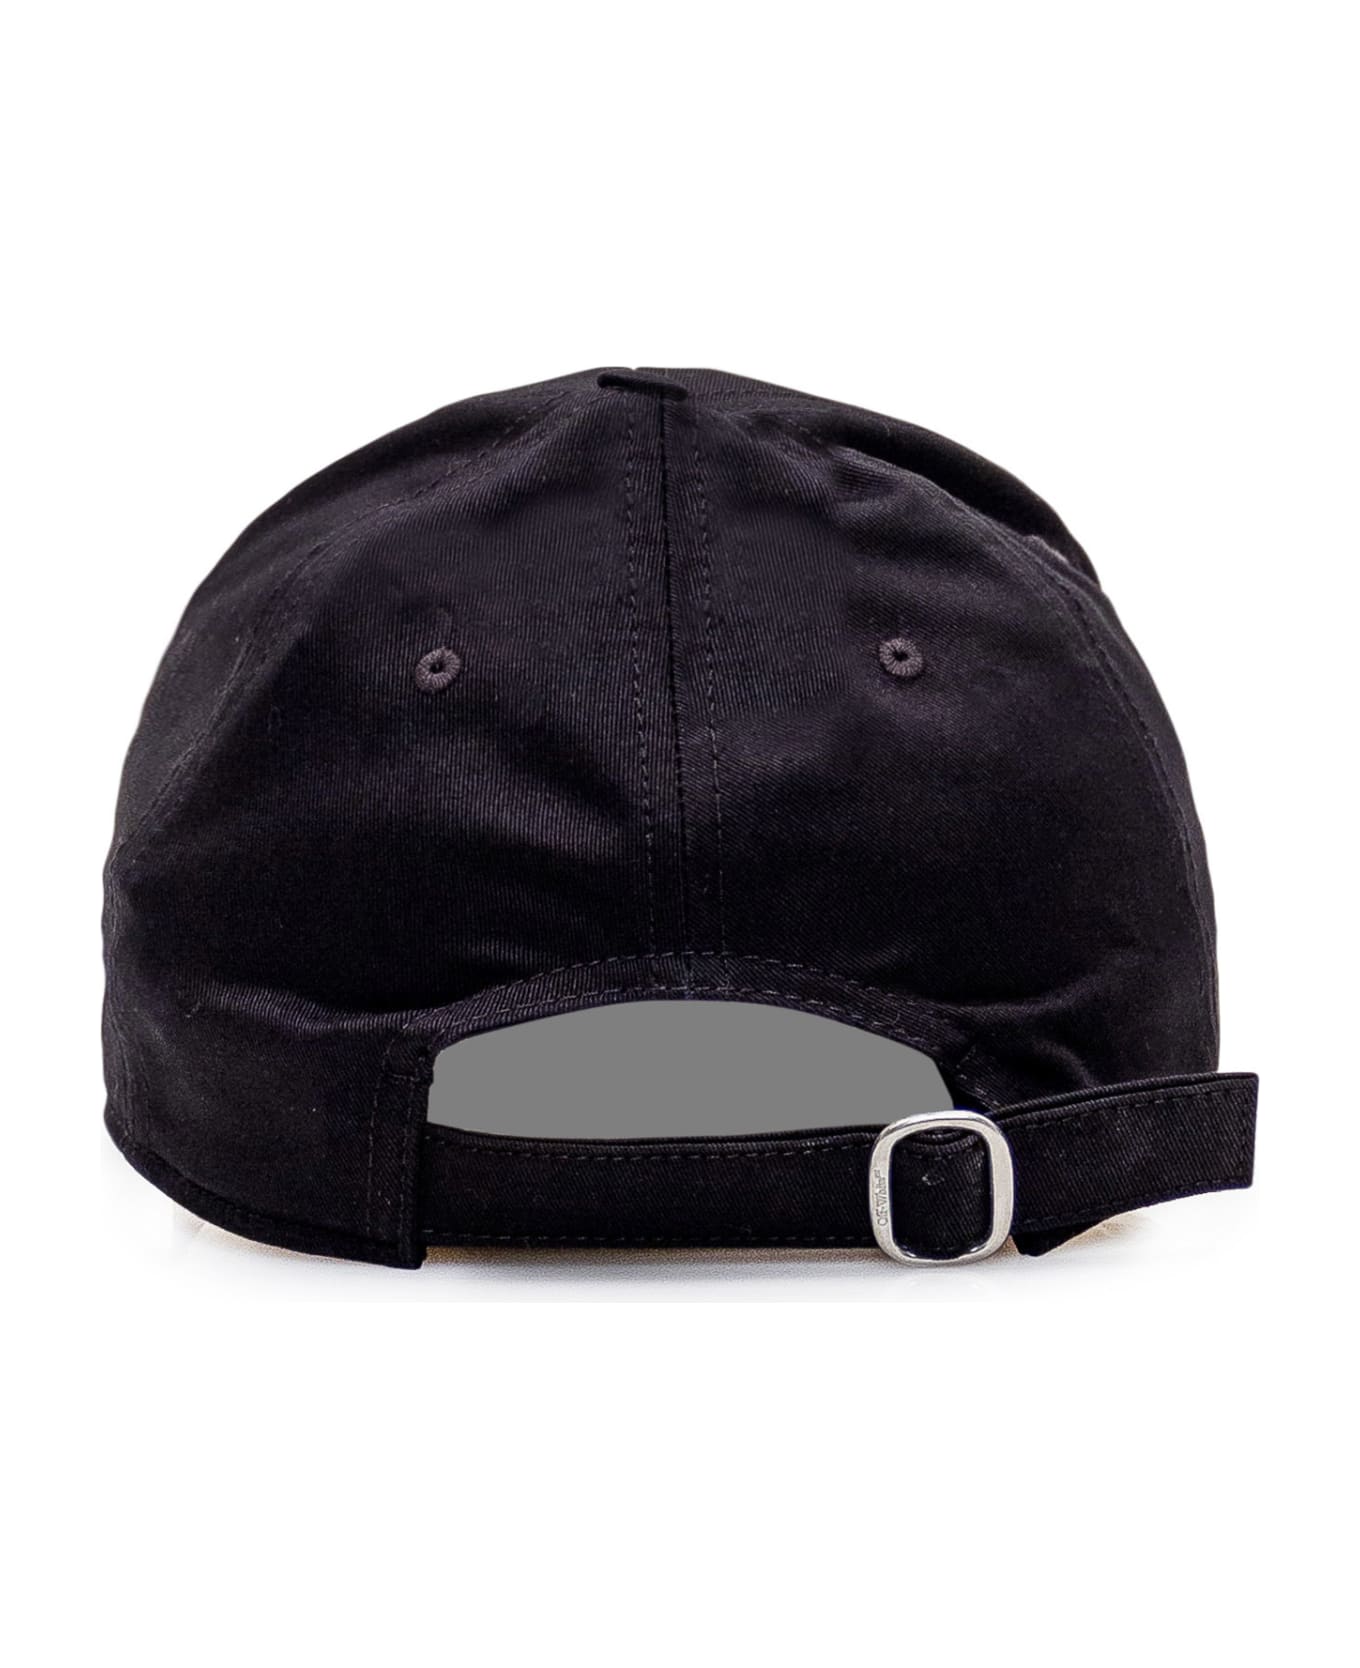 Off-White Black Cotton Hat - Black White 帽子